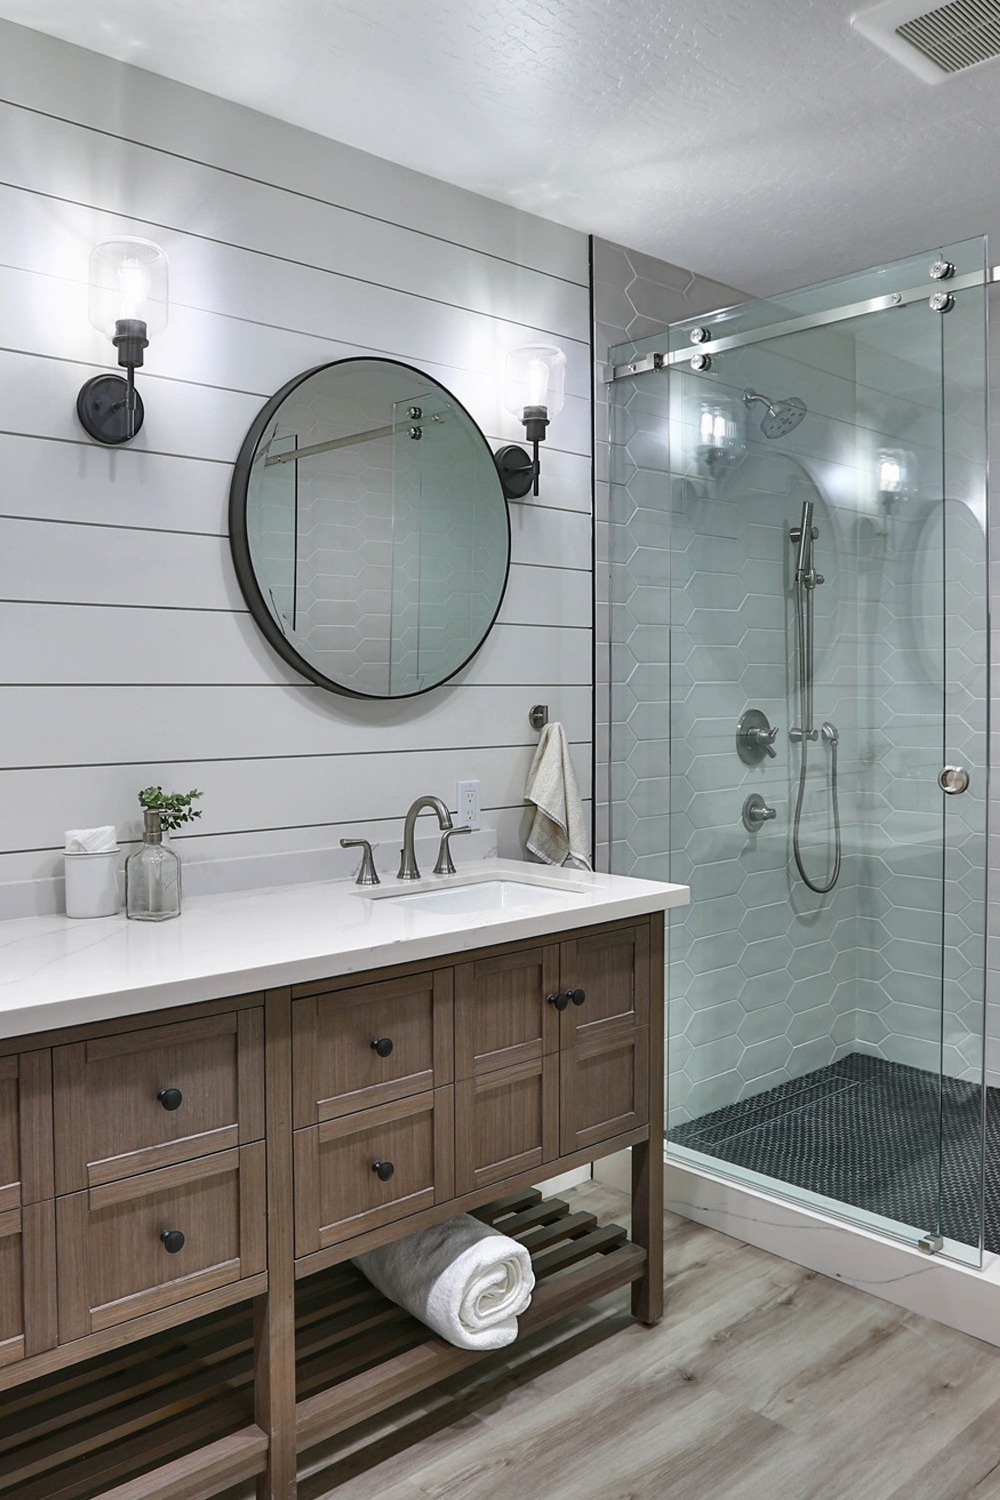 Bathroom Design Re Bath Square Feet Remodel Bathrooms Wall Shower Fixtures Vanity Tub Tile